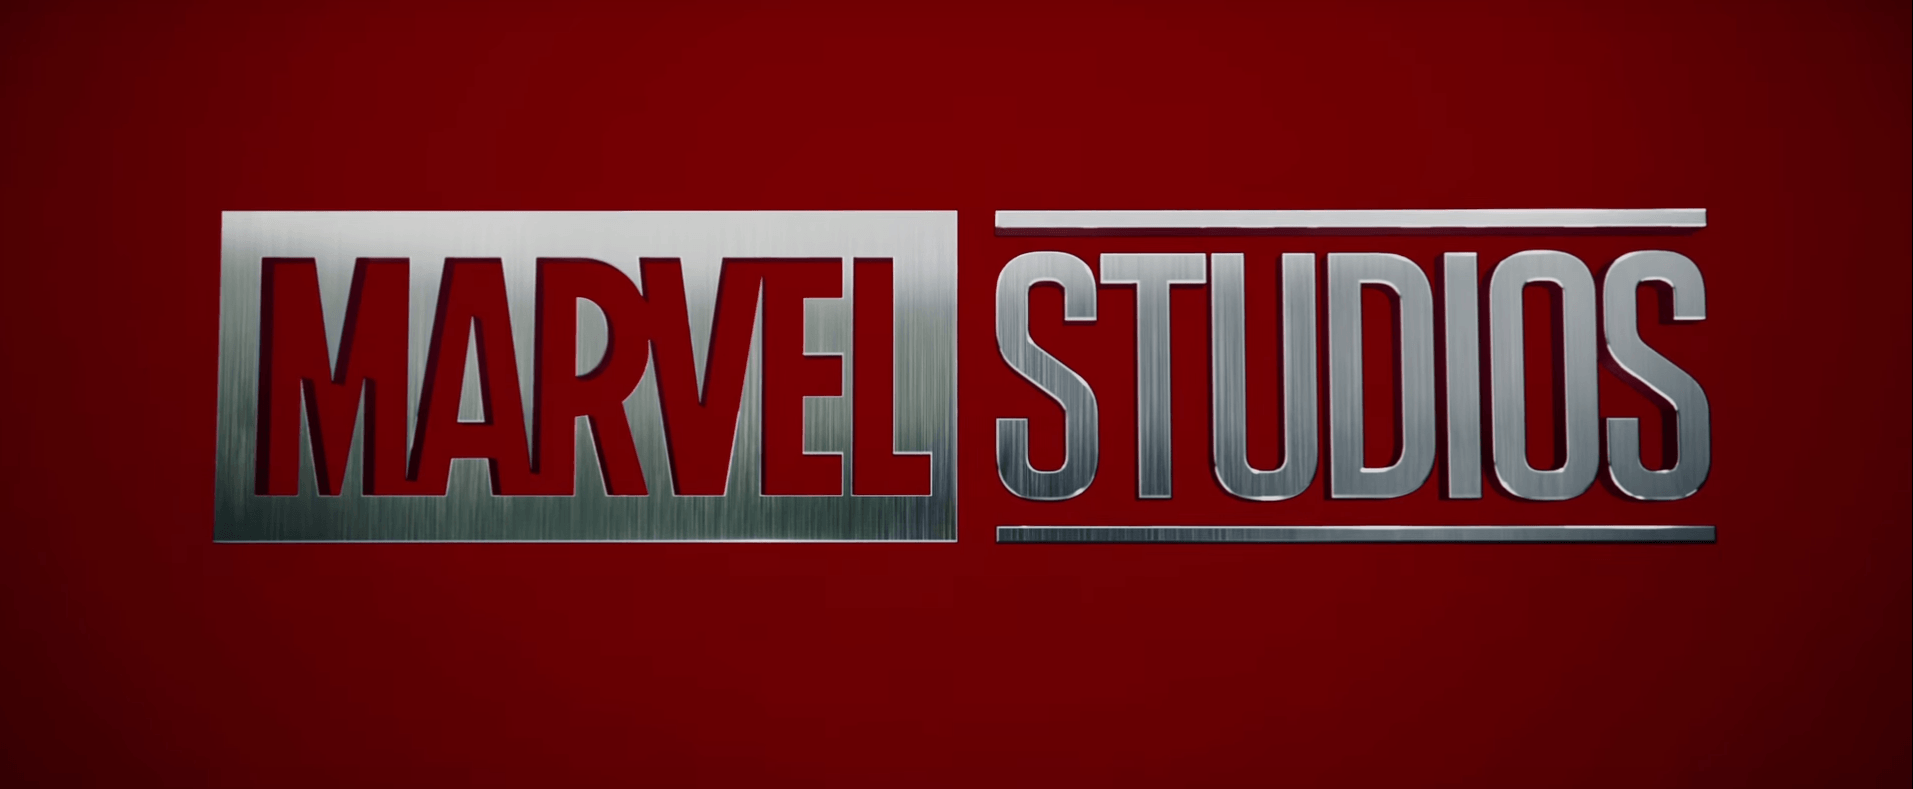 Marvel Avengers Infinity War HD Wallpaper Character Image